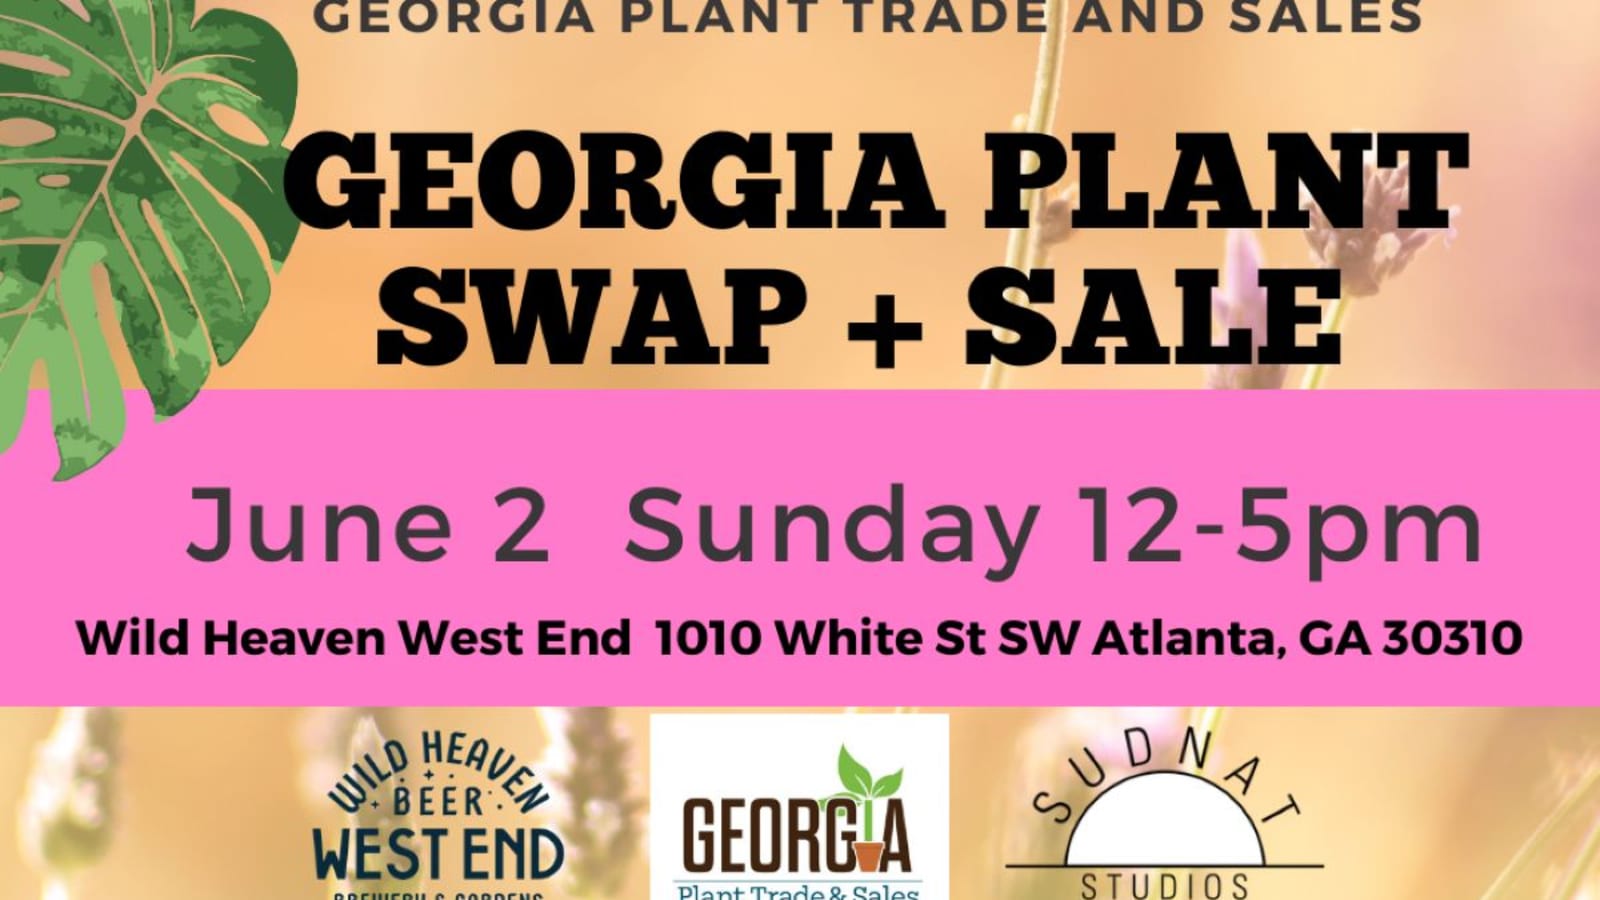 Georgia Plant Swap + Sale June Bug